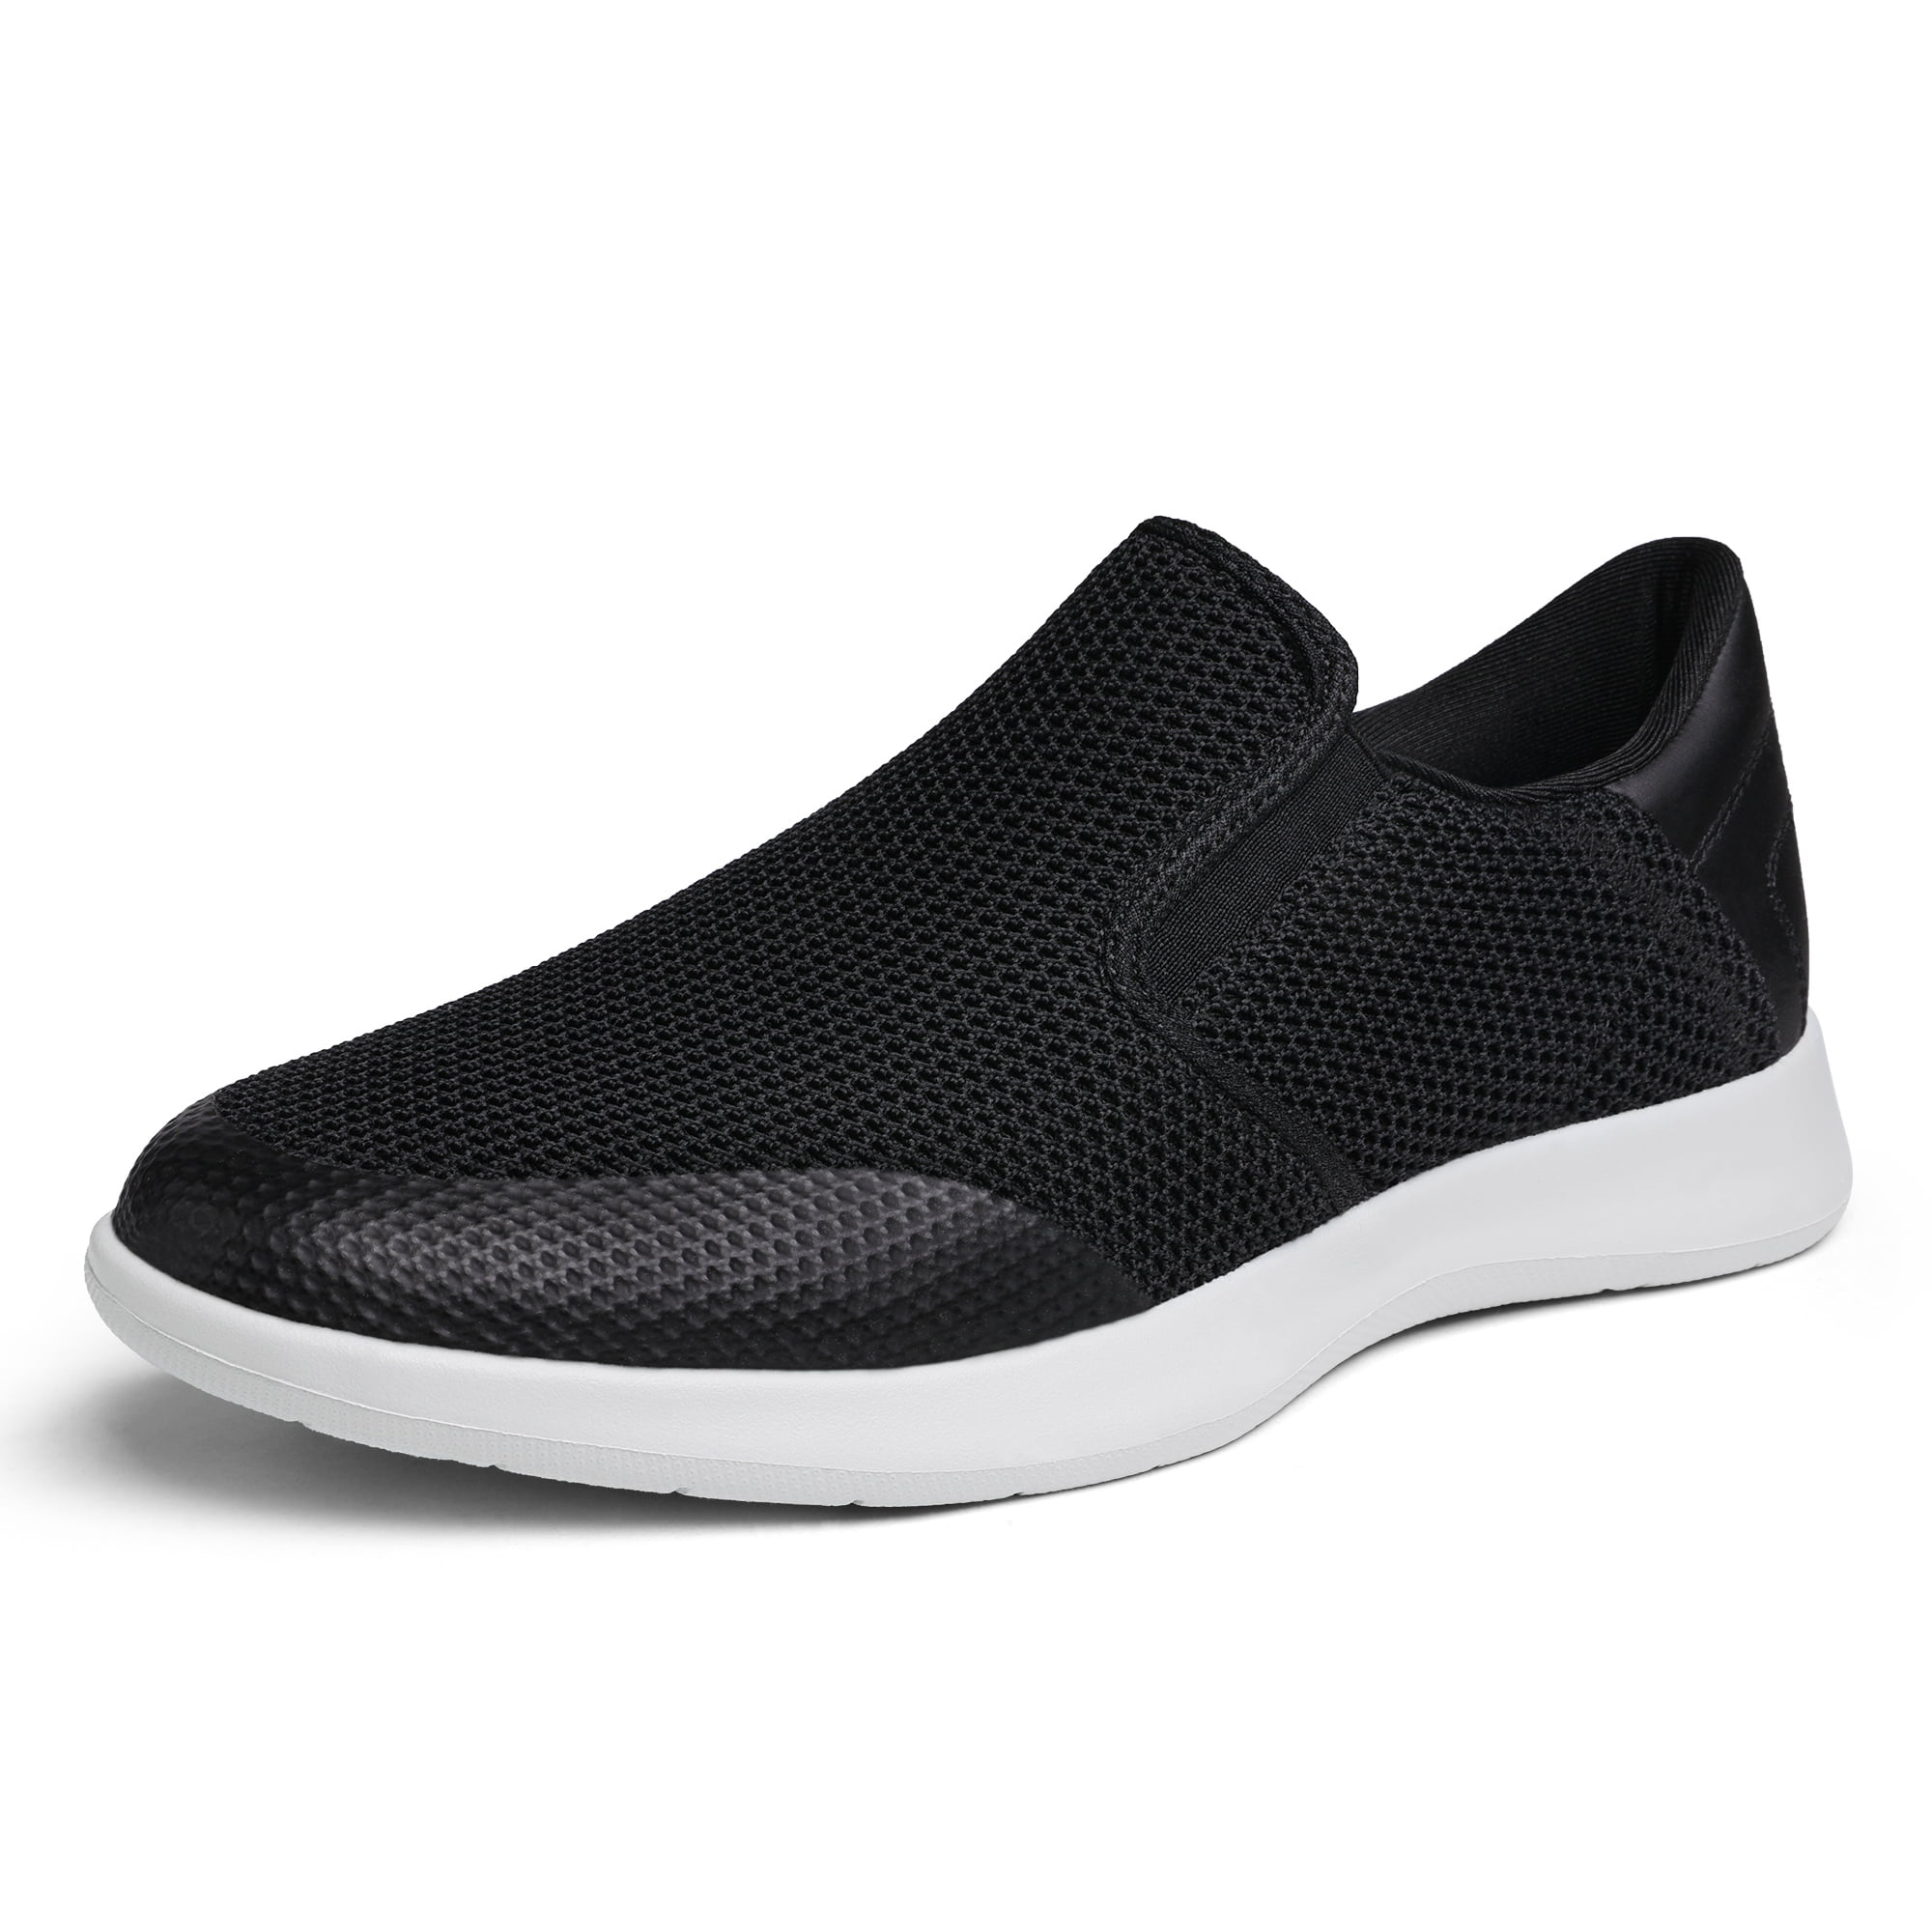 Bruno Marc Men’s Comfort Slip-on Sneakers Walking Shoes Casual Slip-on ...